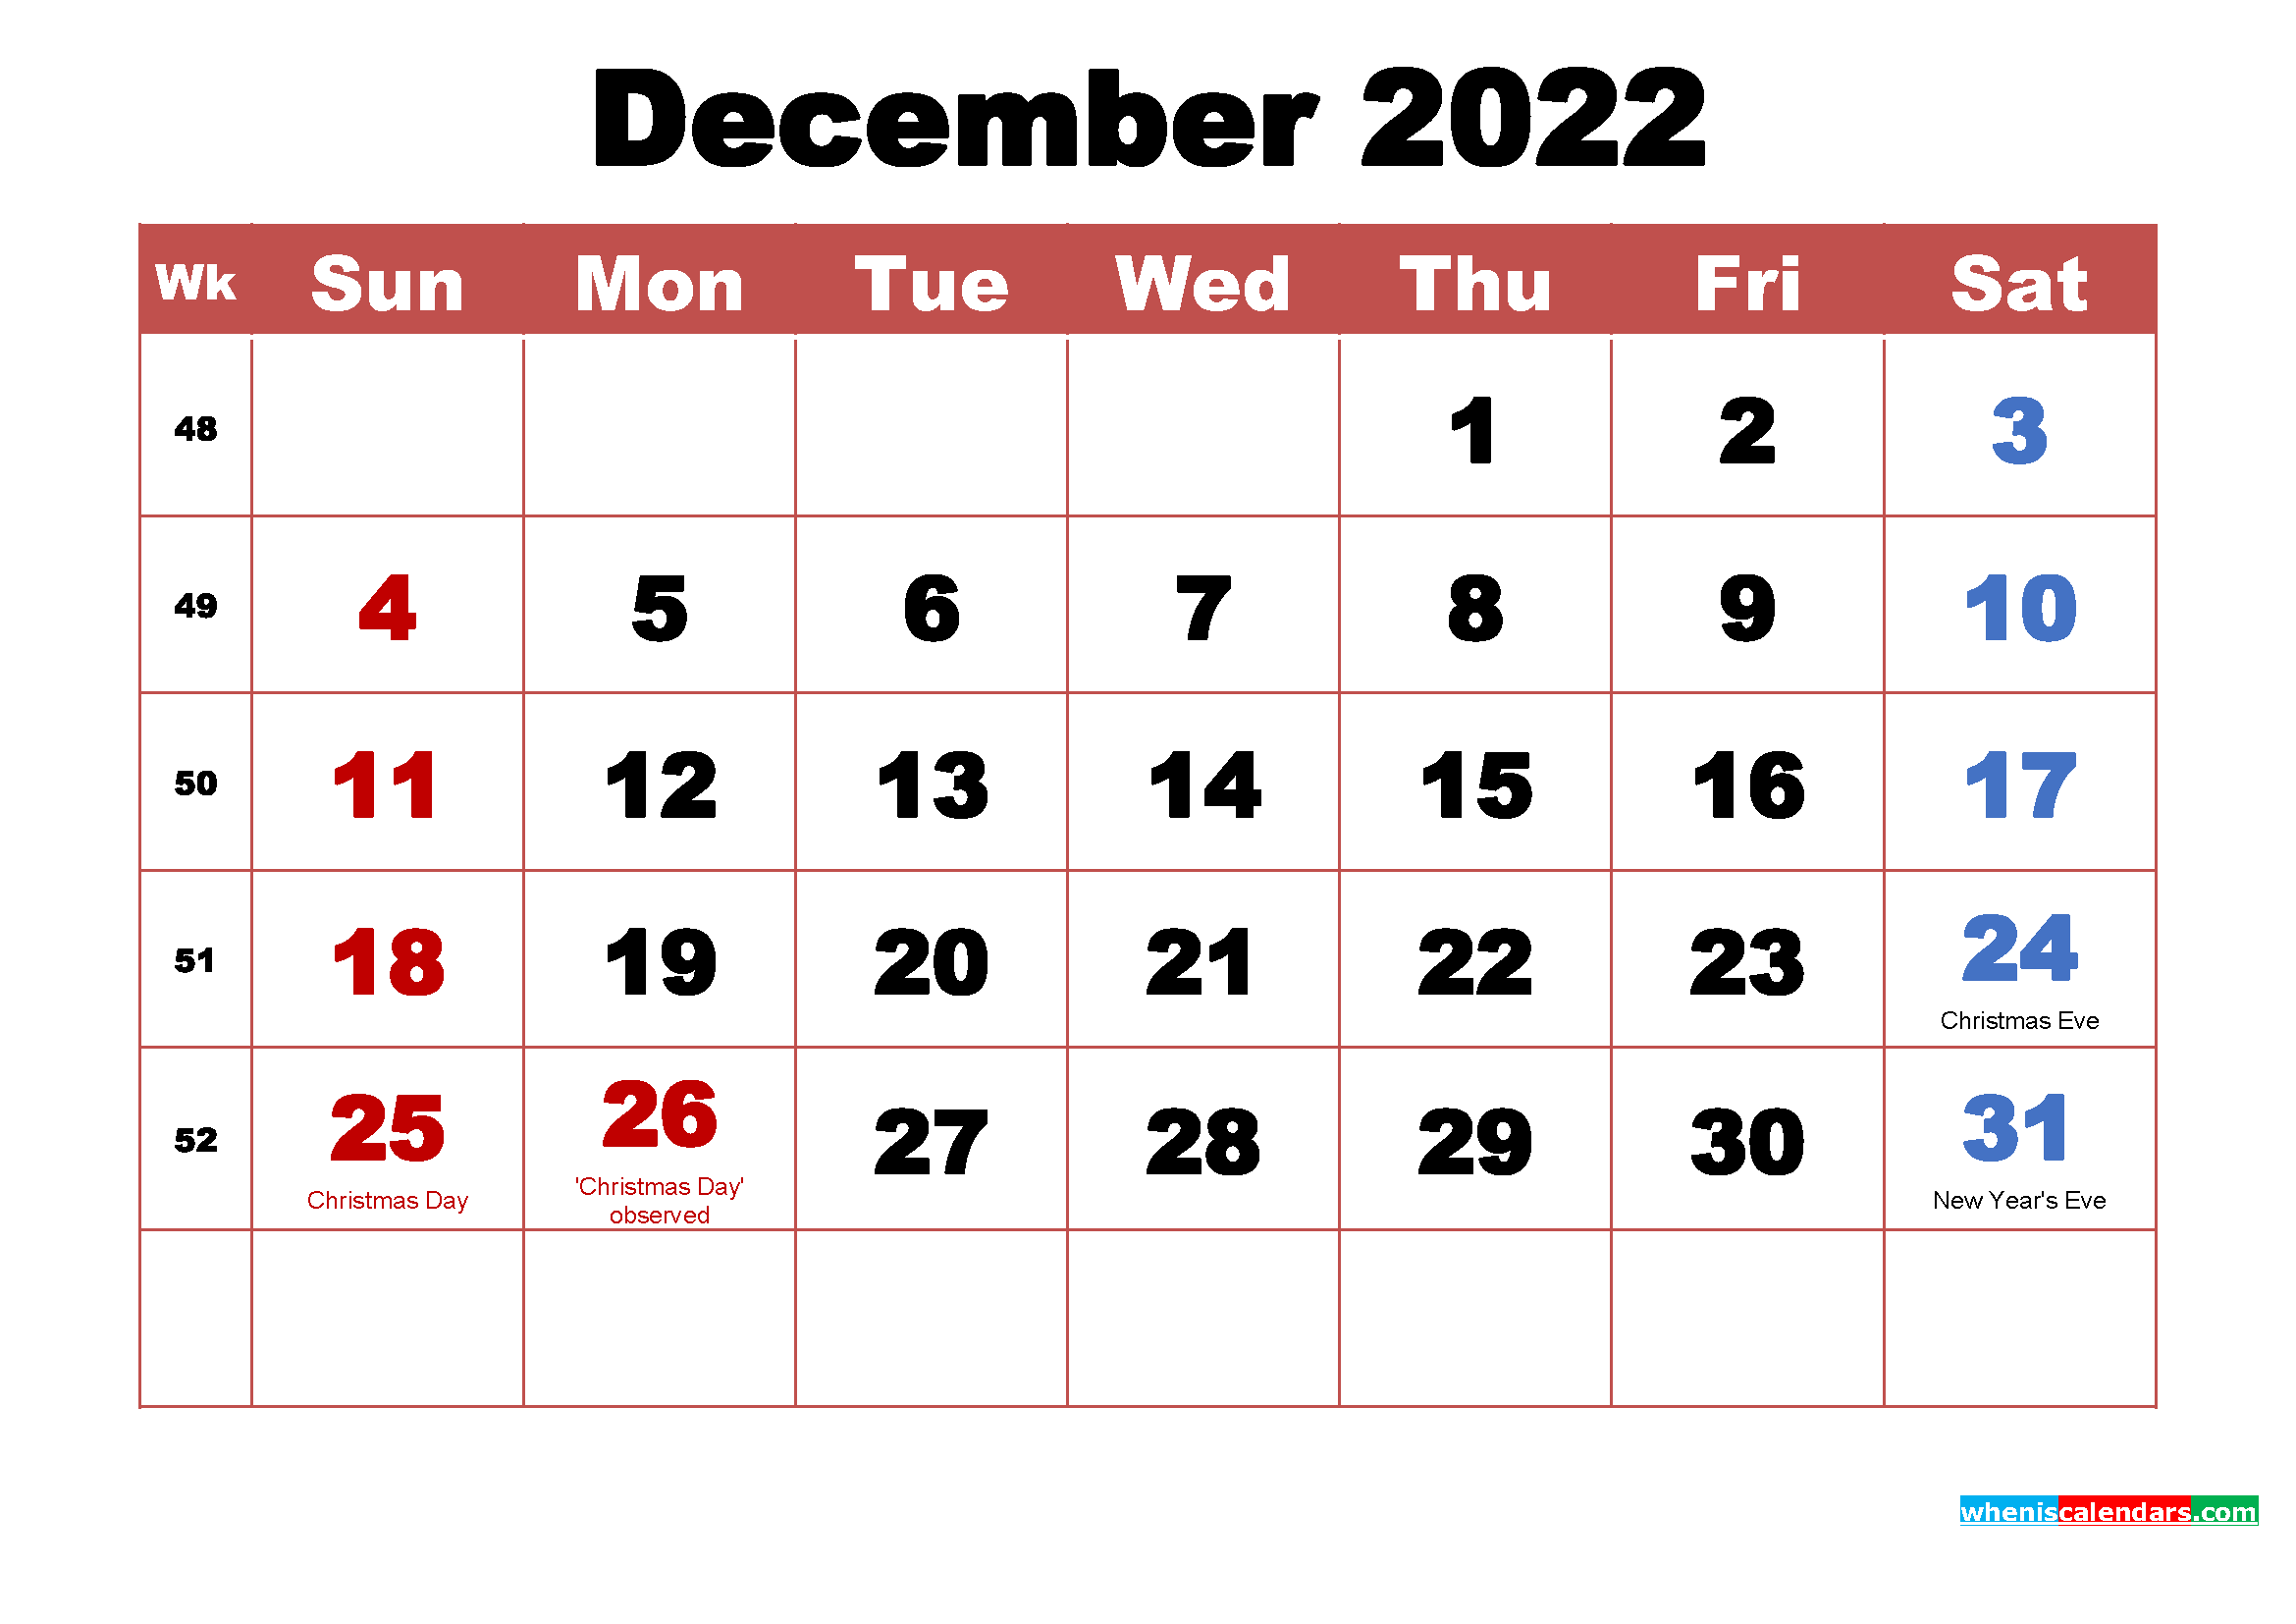 december 2022 calendar free printable calendar - december 2022 calendar ...